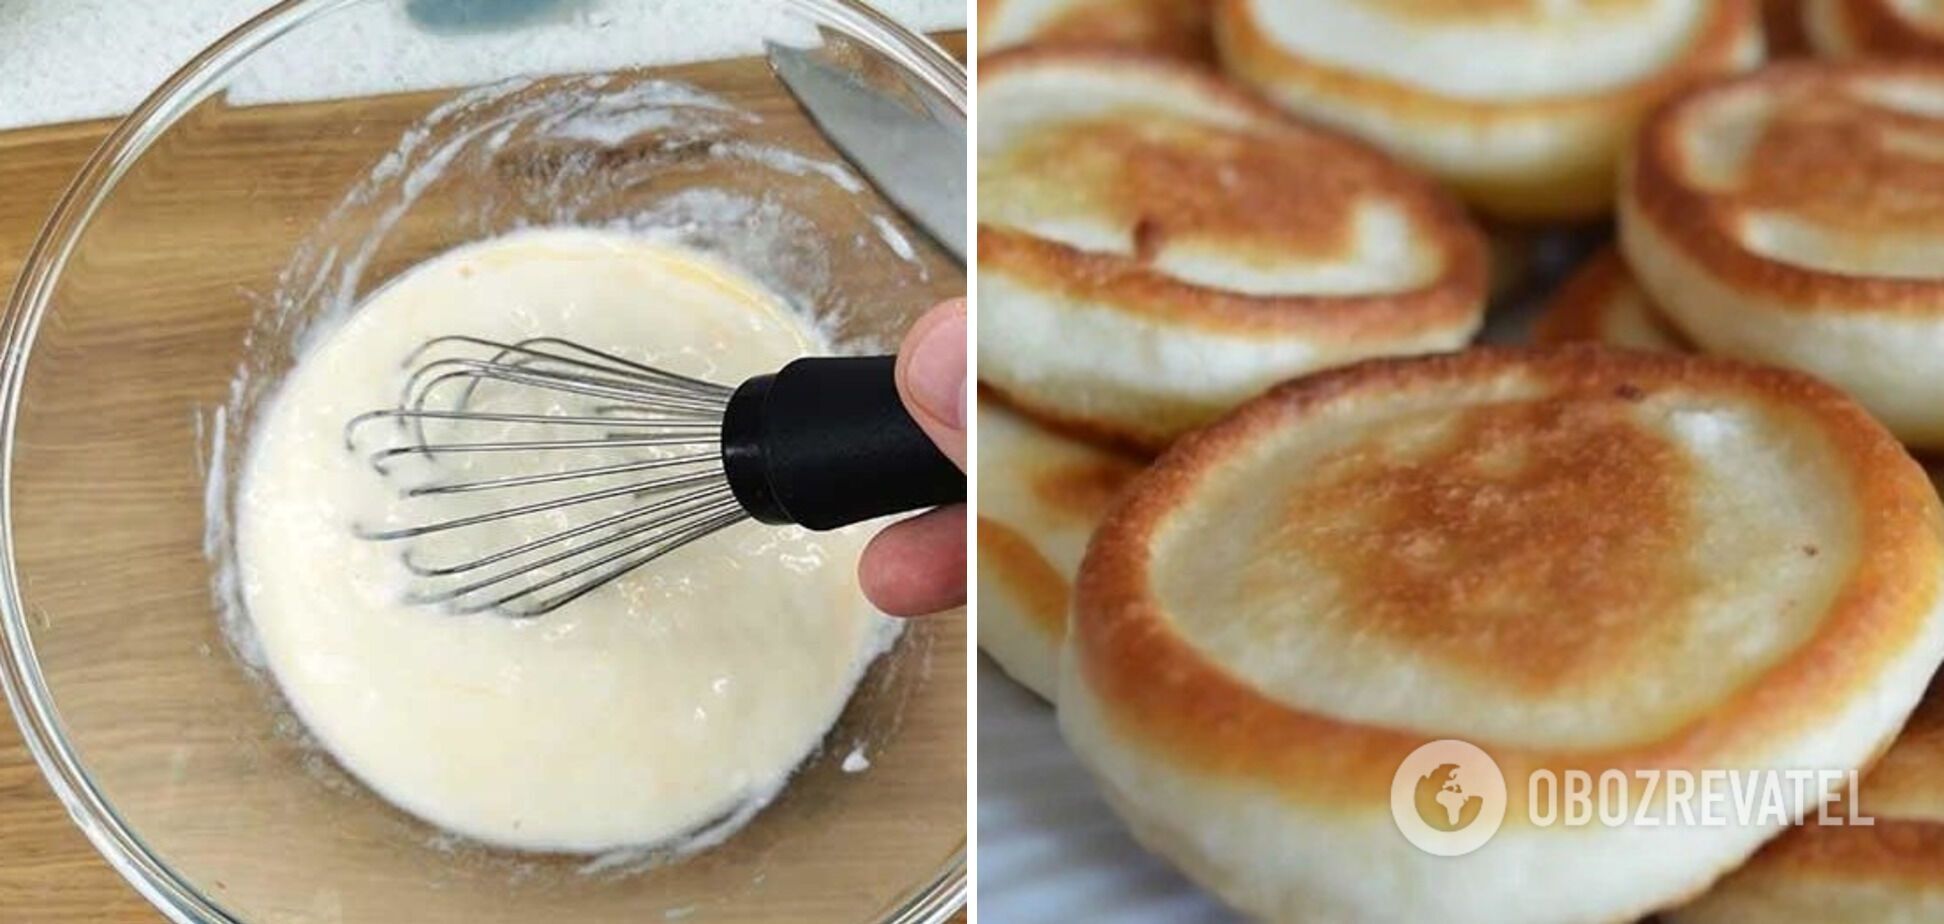 The sour cream batter for apple pancakes